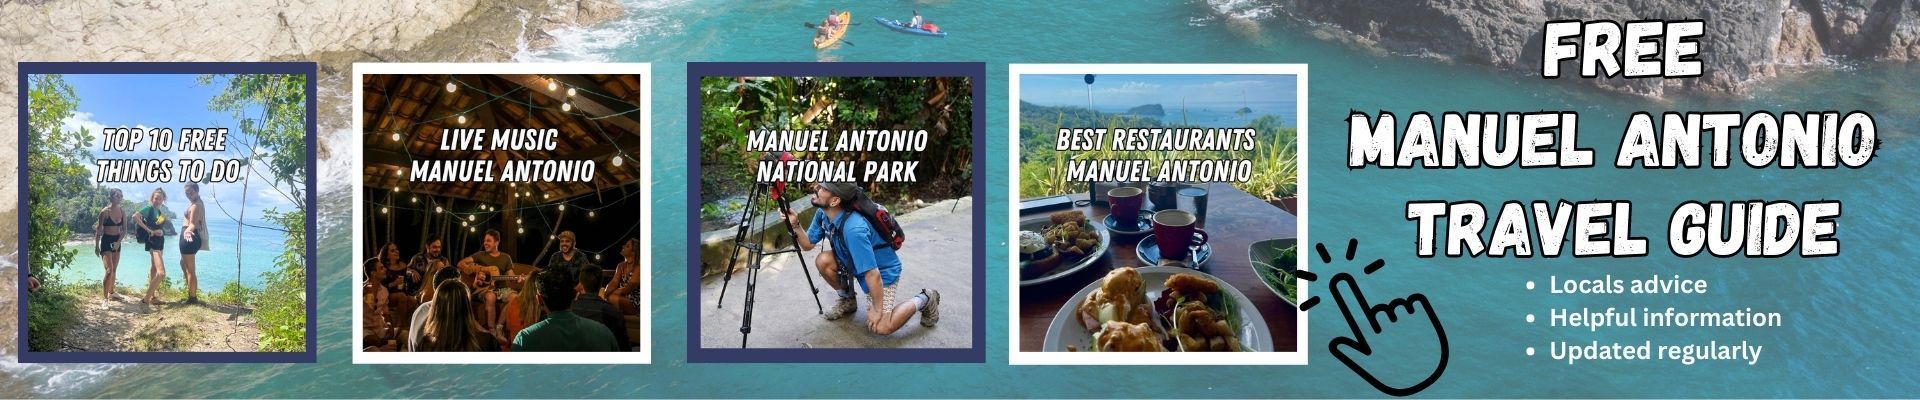 Manuel Antonio Travel Guide